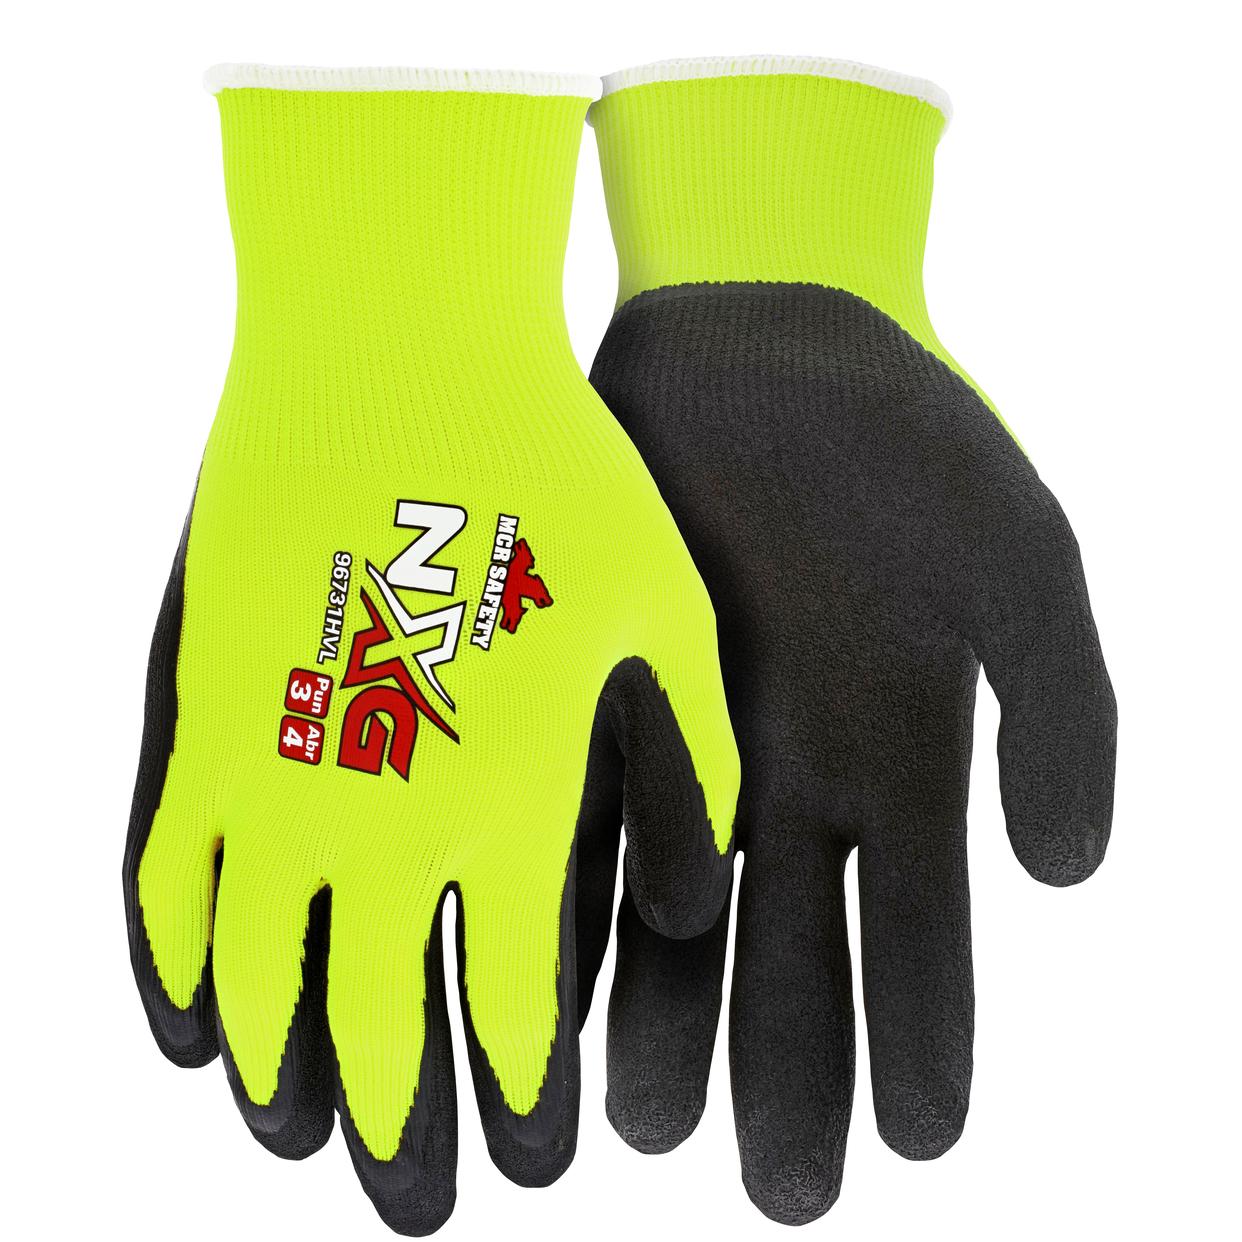 memphis latex gloves